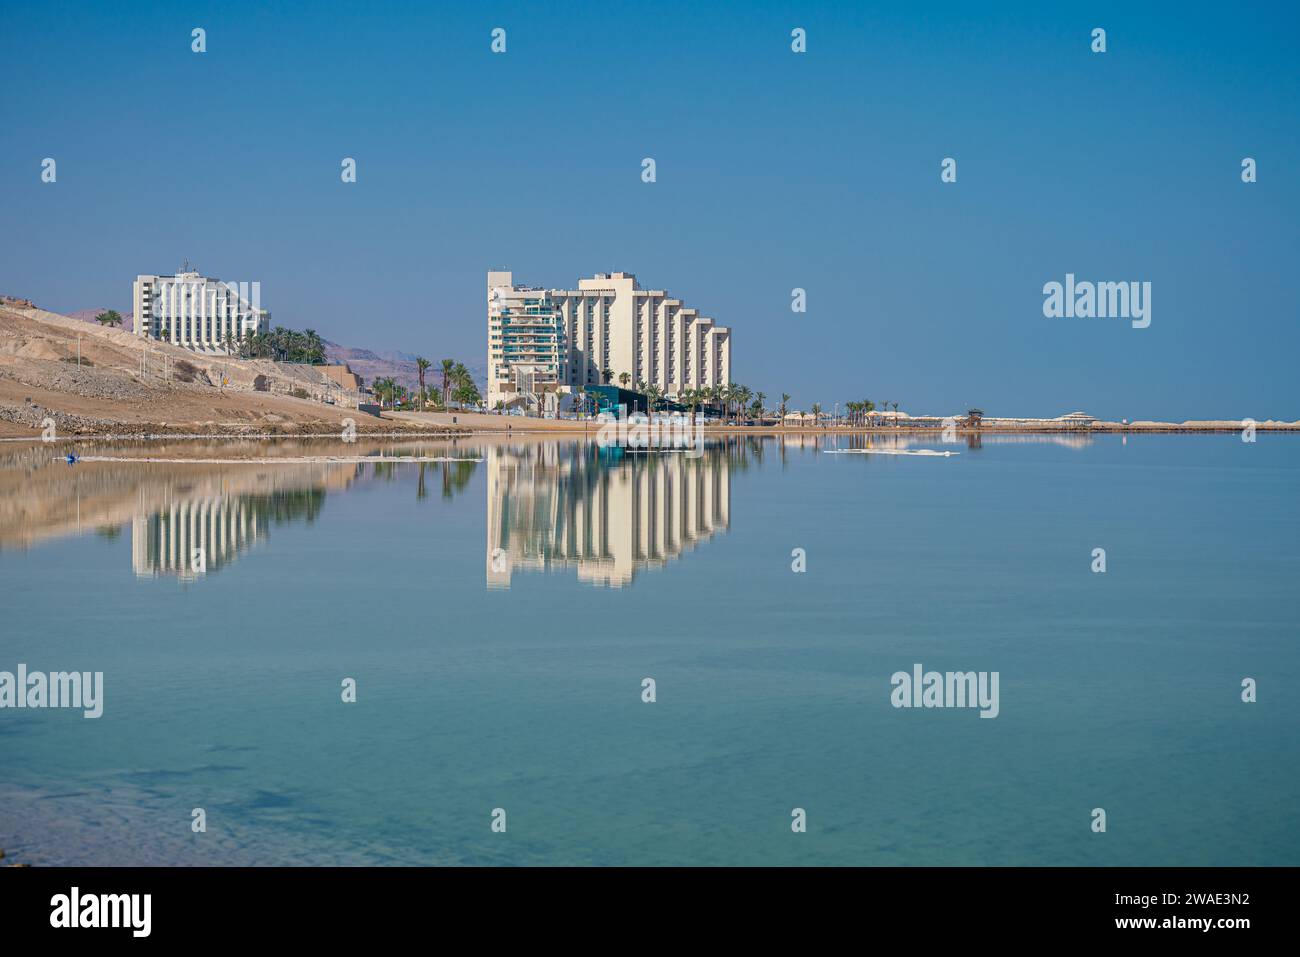 Ein Bokek, Hotel and Resort village on the Dead Sea, Israel Stock Photo